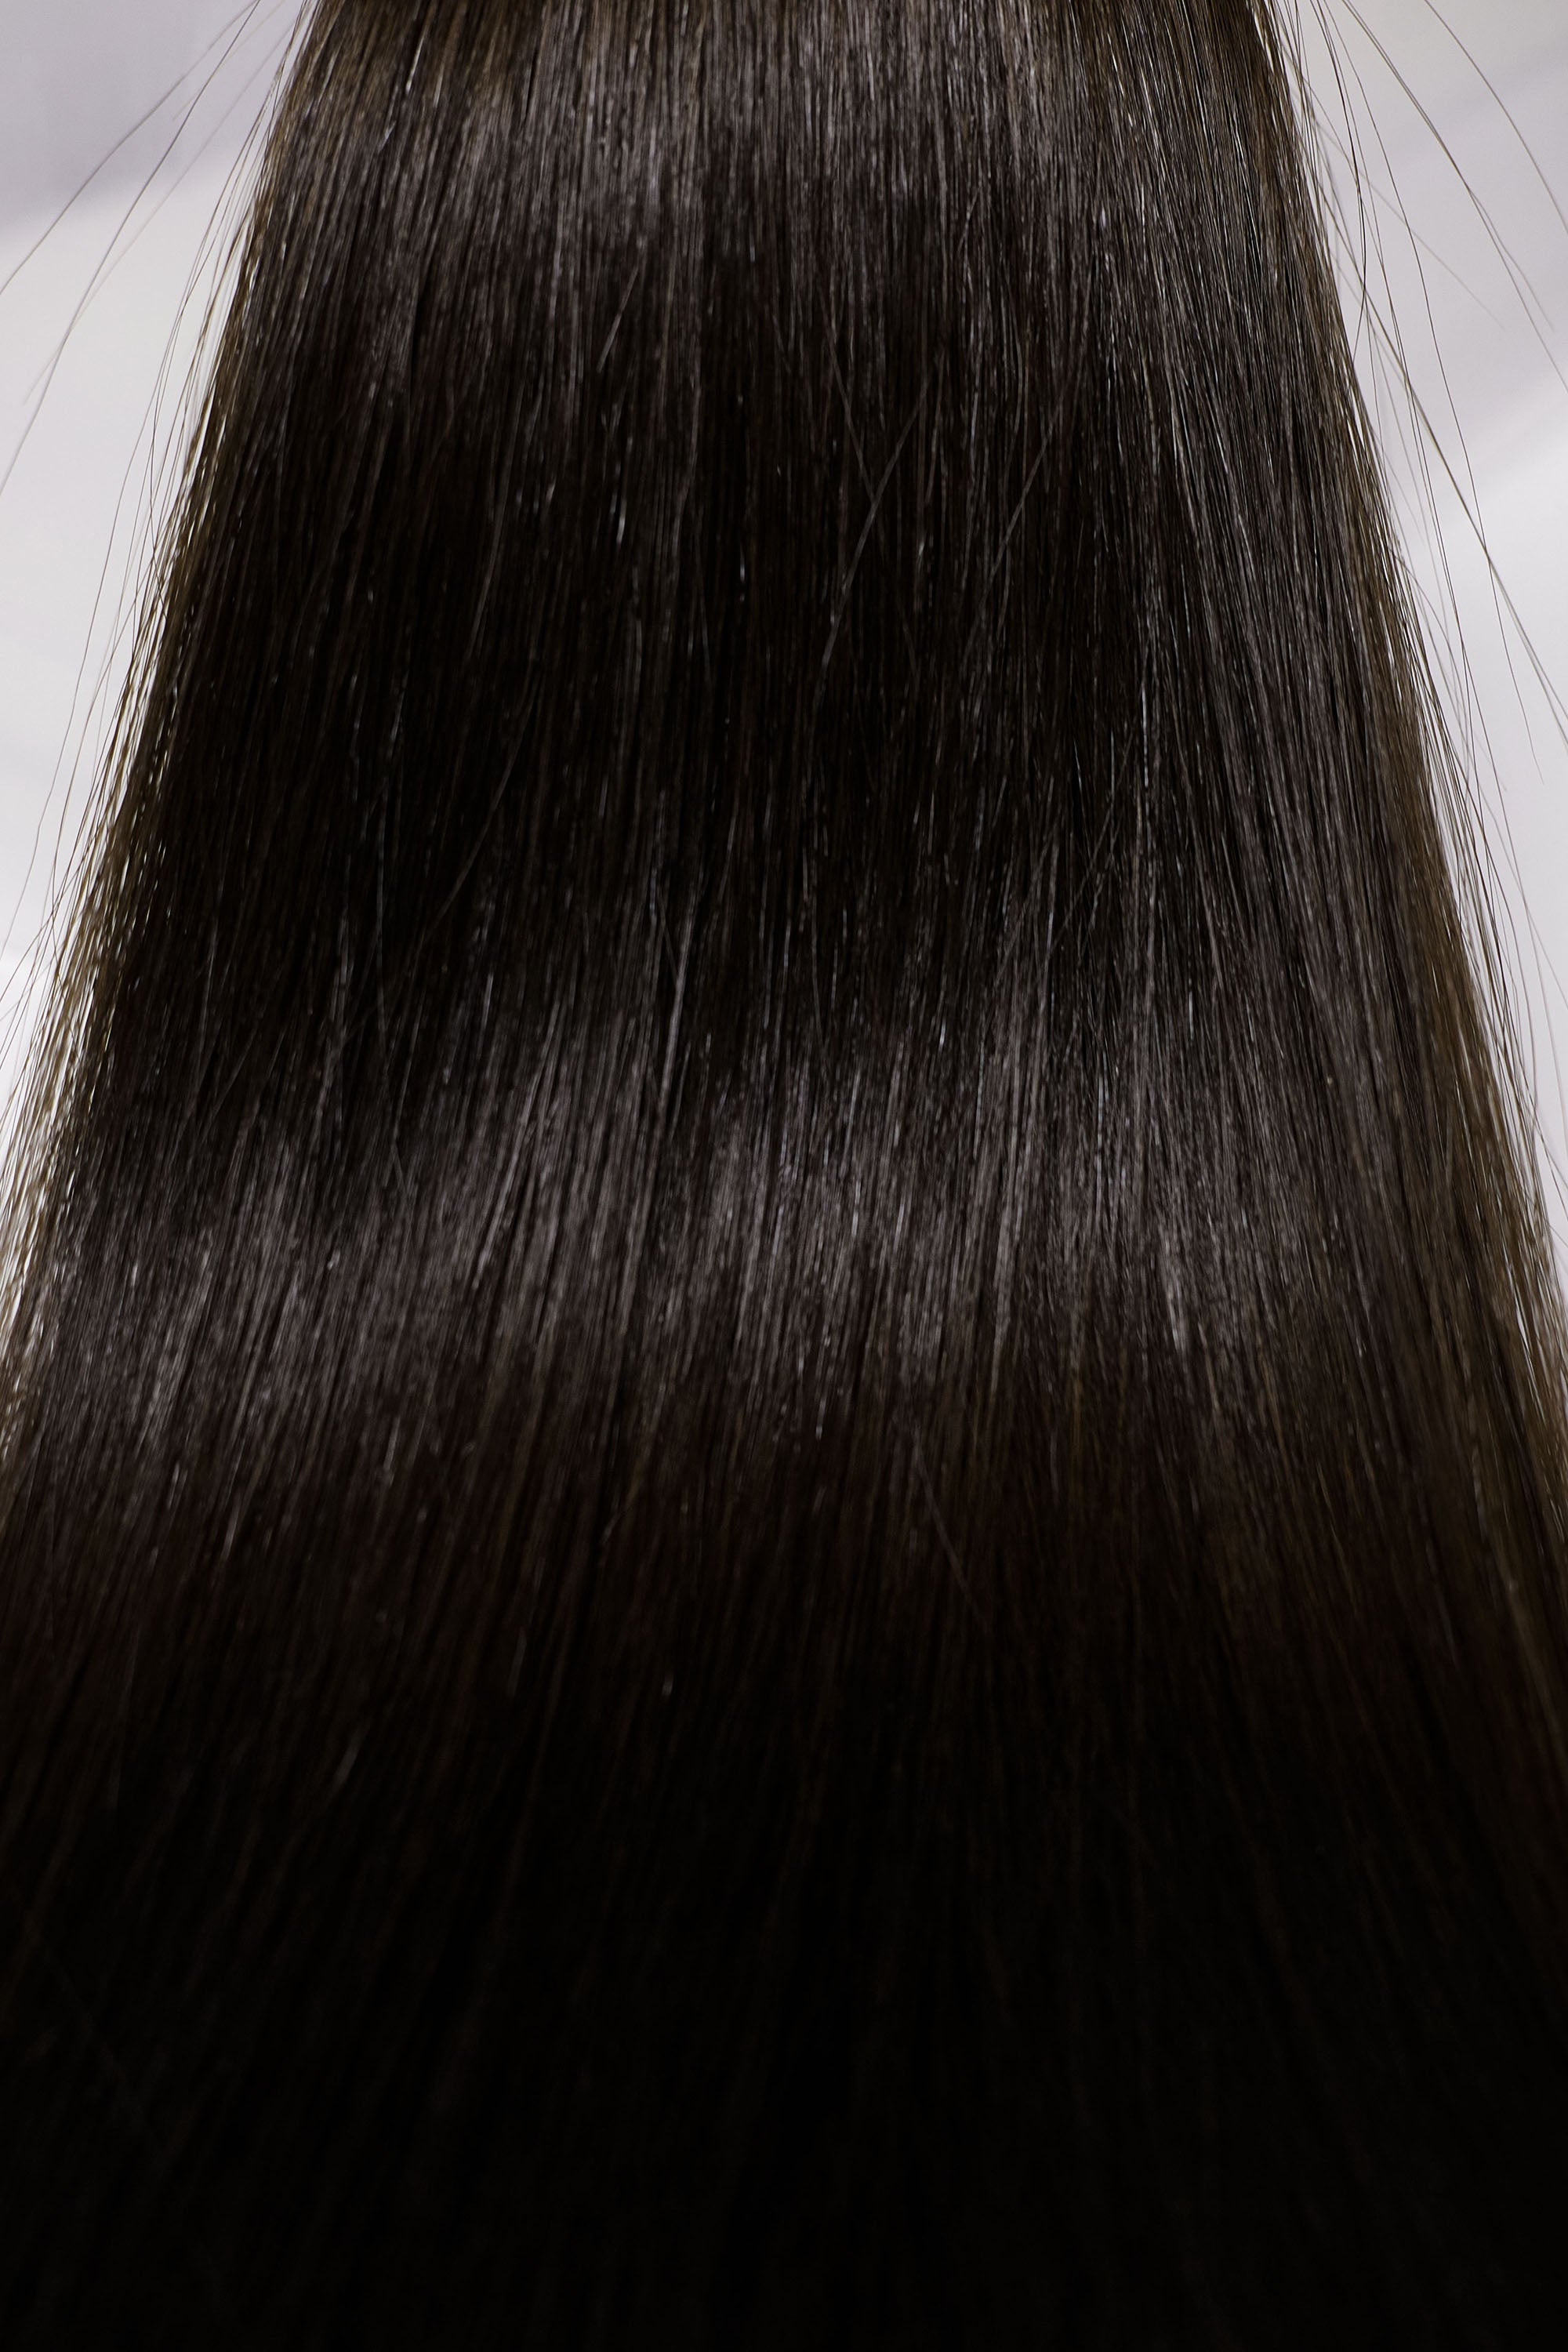 Behair professional Keratin Tip "Premium" 16" (40cm) Natural Straight Natural Black #1B - 25g (1g each pcs) hair extensions